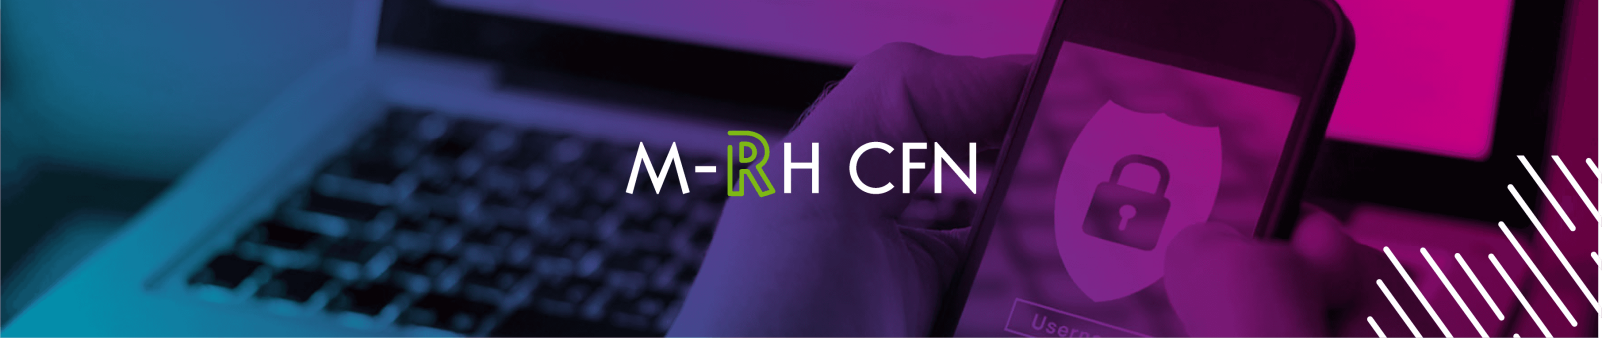 M-RH CFN